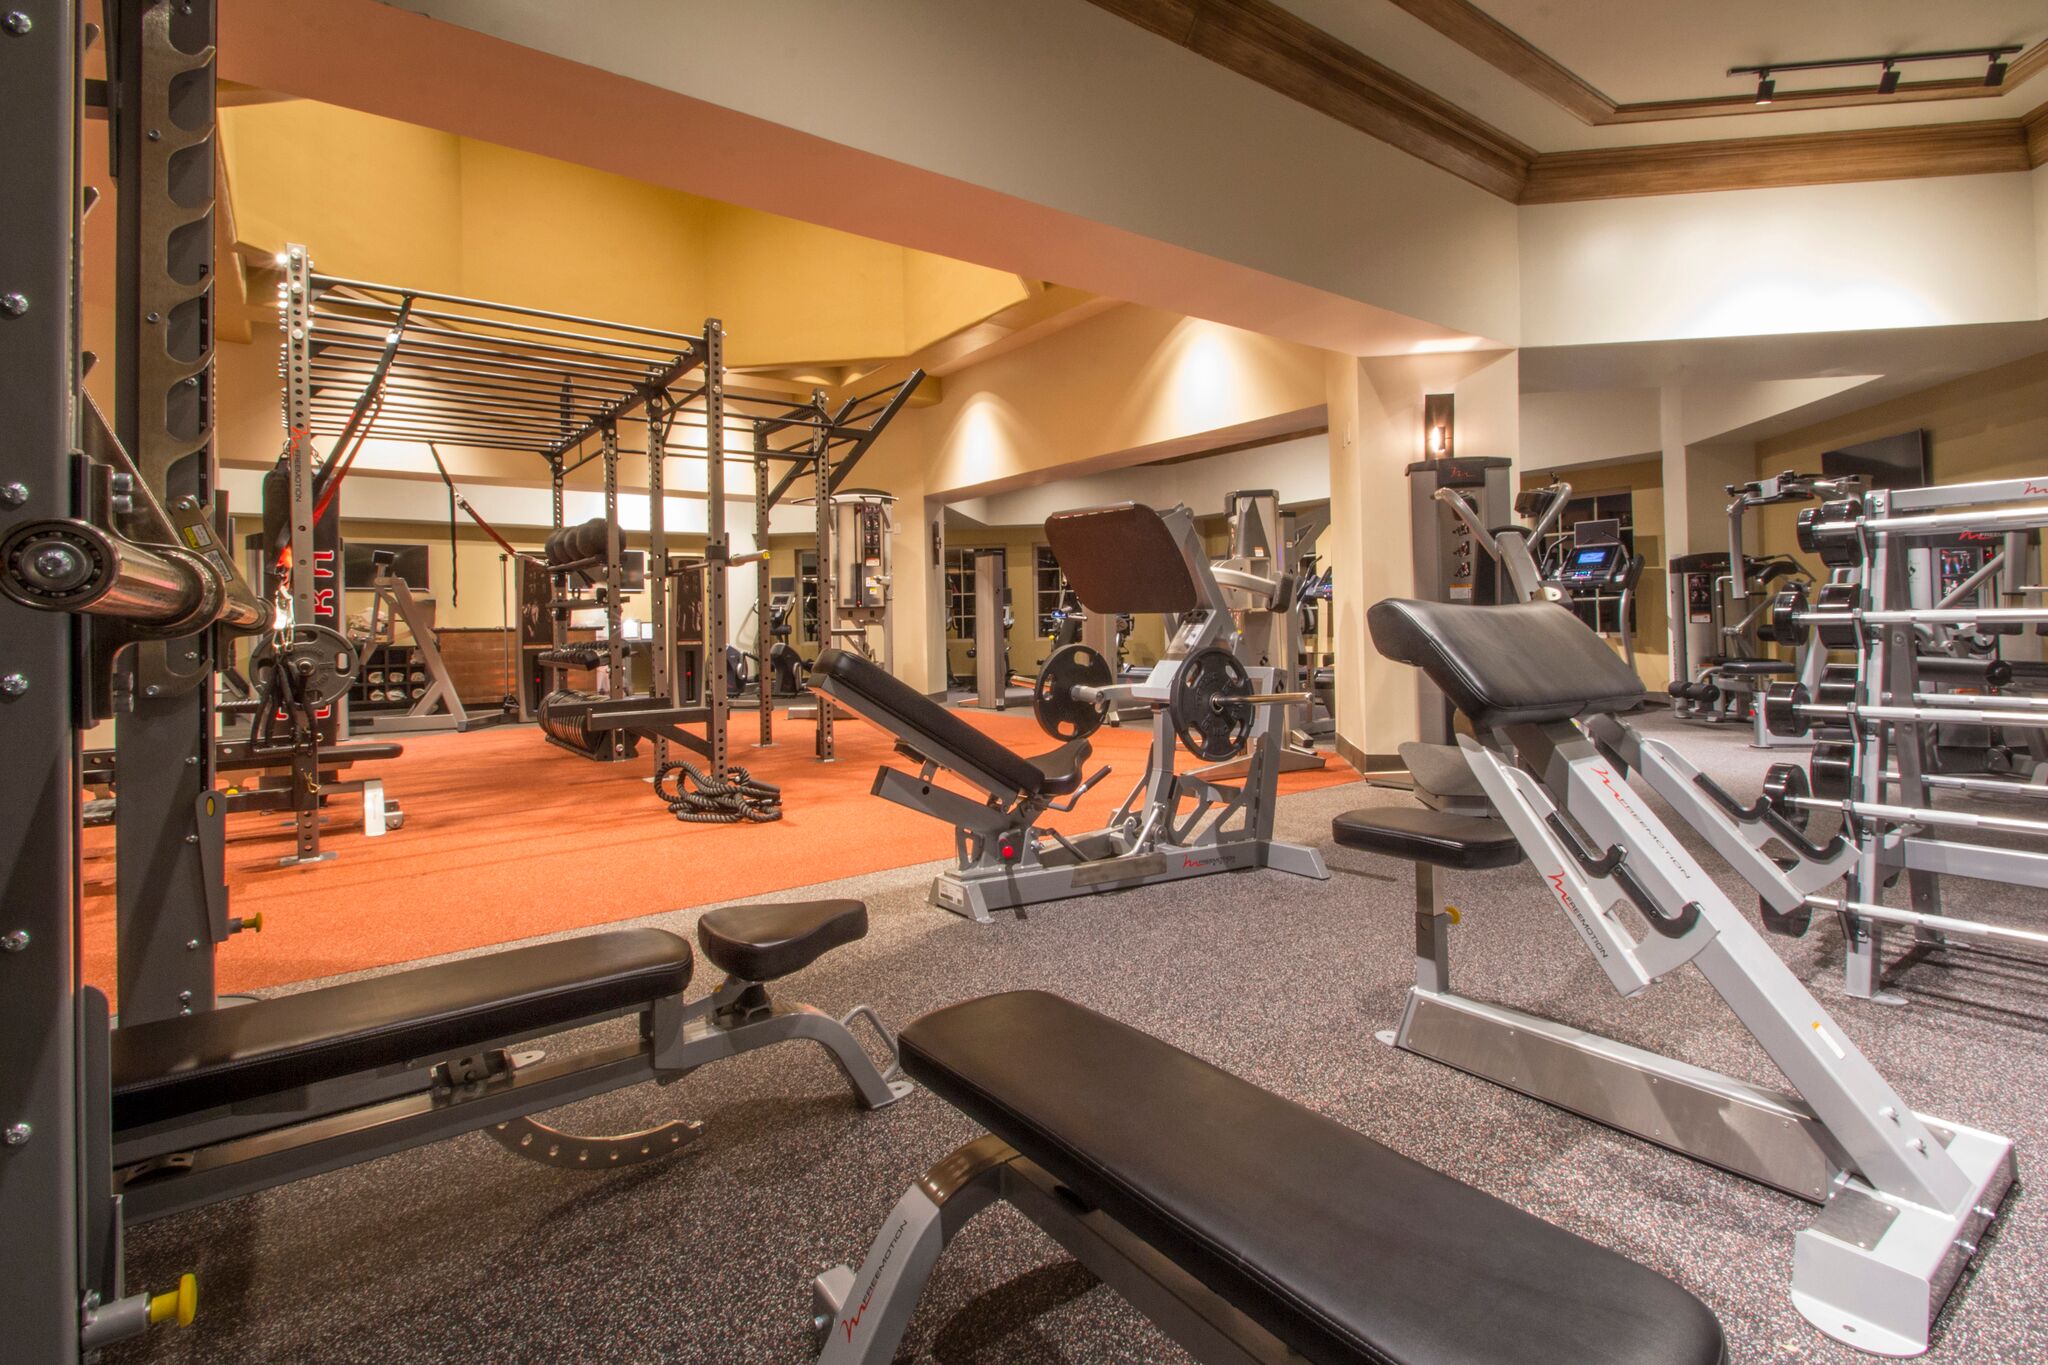 Health Club, Gym & Fitness Center in San Antonio